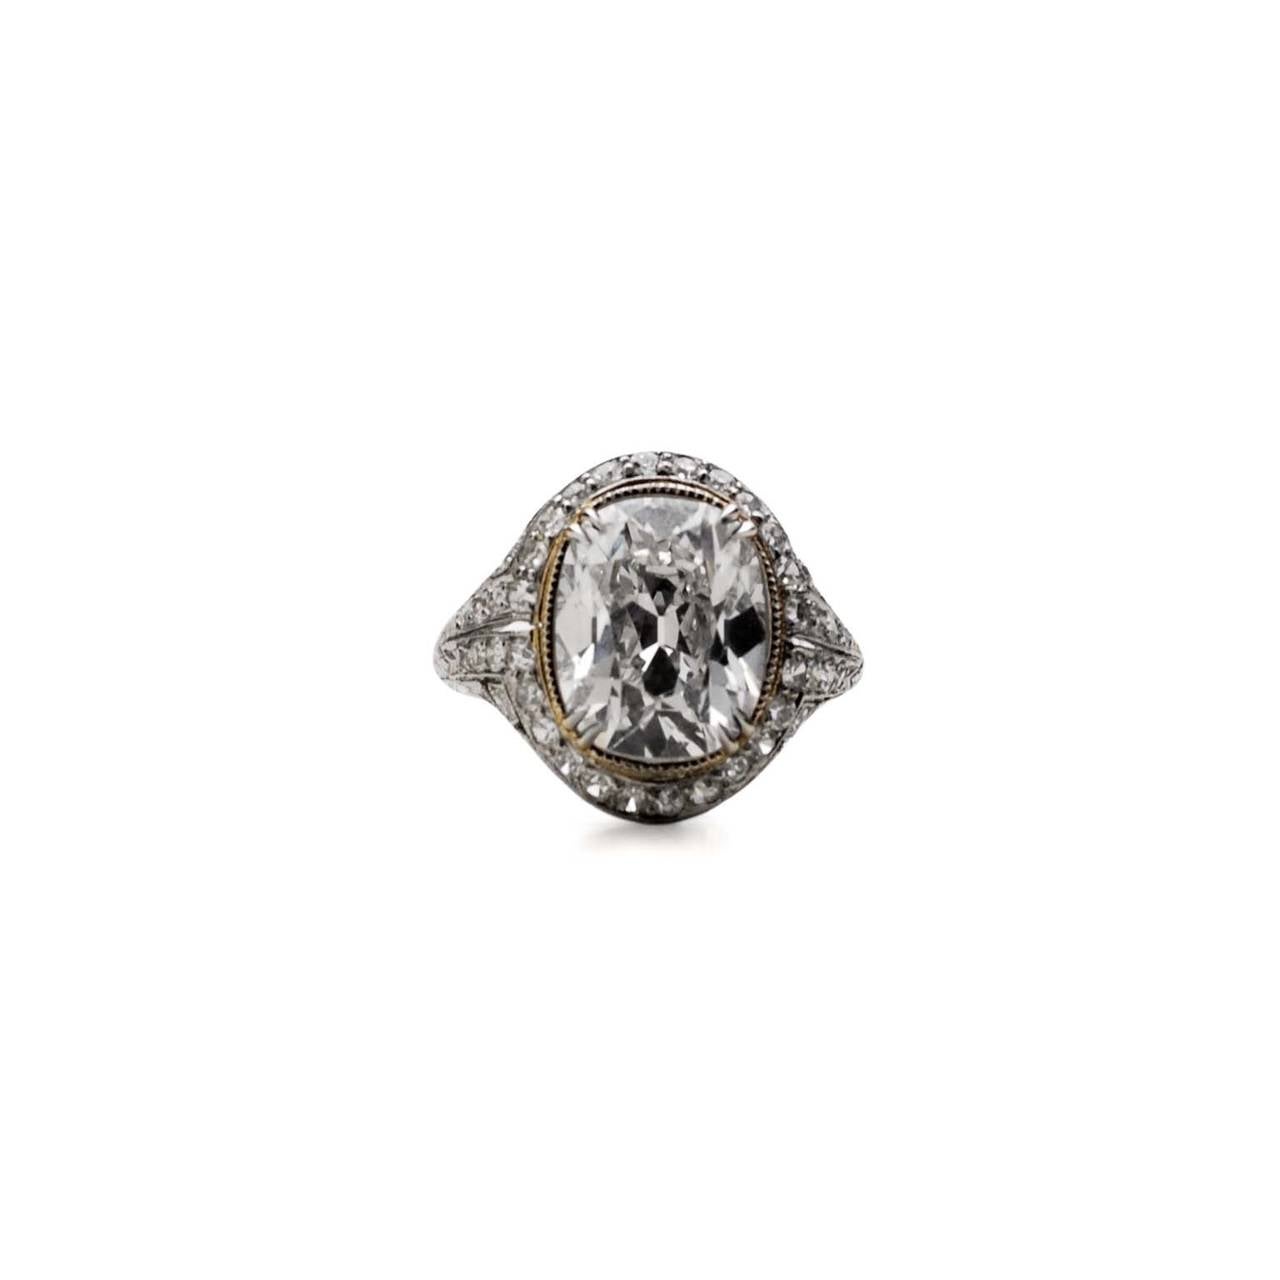 J.E. Caldwell Deco Platinum Ring, Old Mine Cut Diamond. 

Estimated weight of F color / VS2 diamond: 5.57ct
Estimated weight of single cut diamonds: 0.65ct